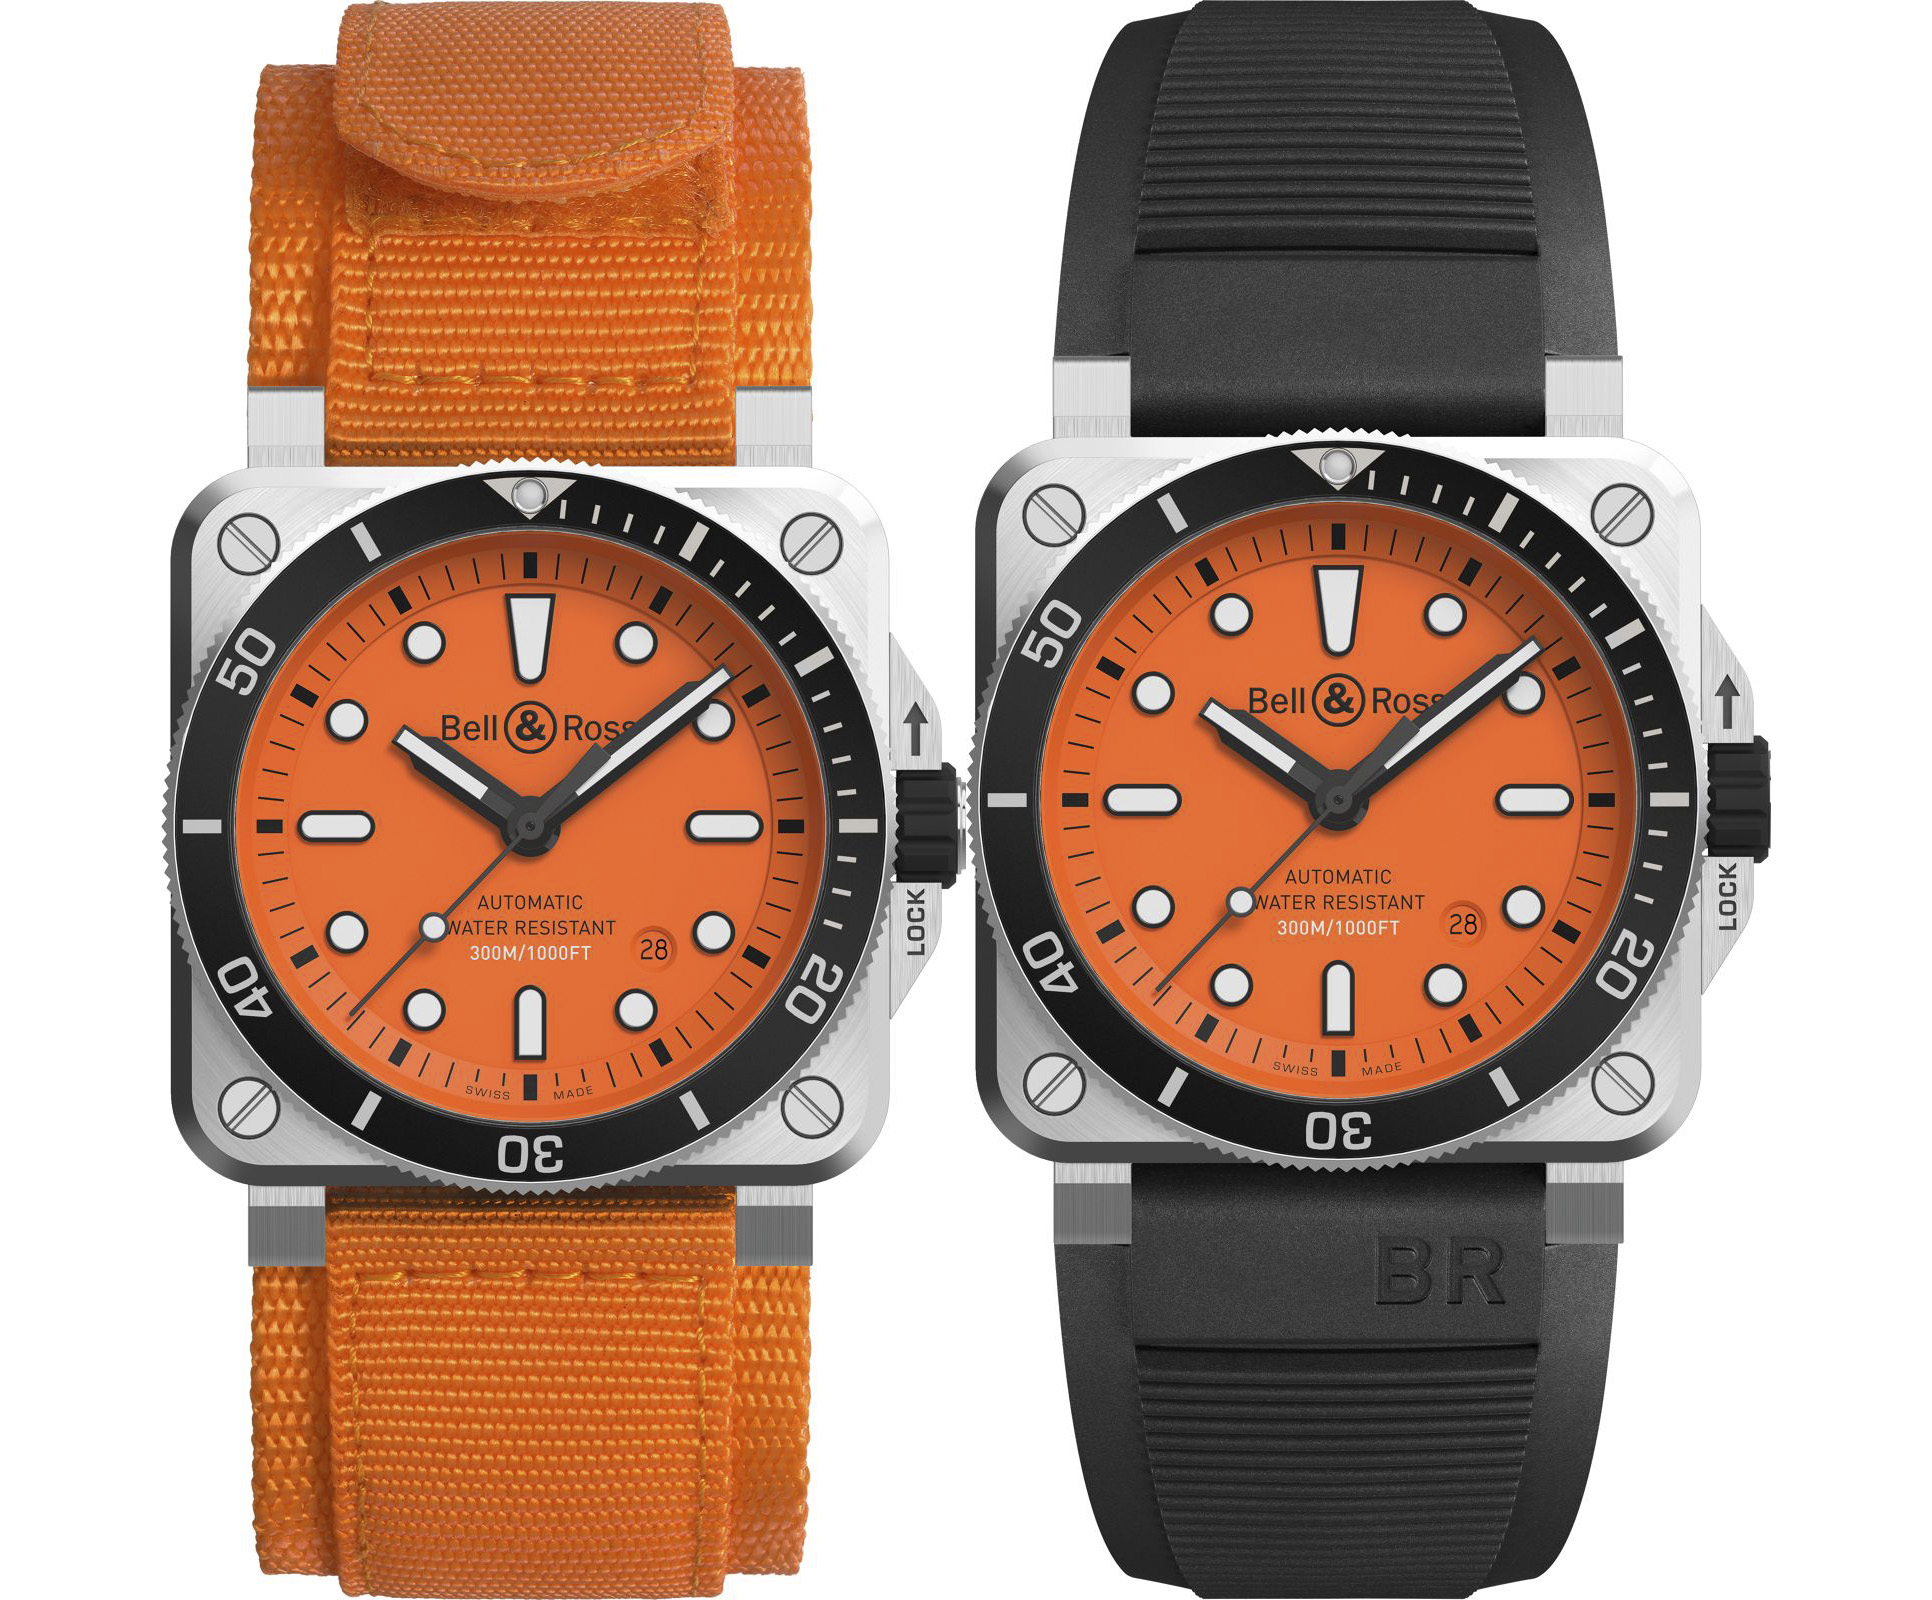 The waterproof replica watches have orange dials.